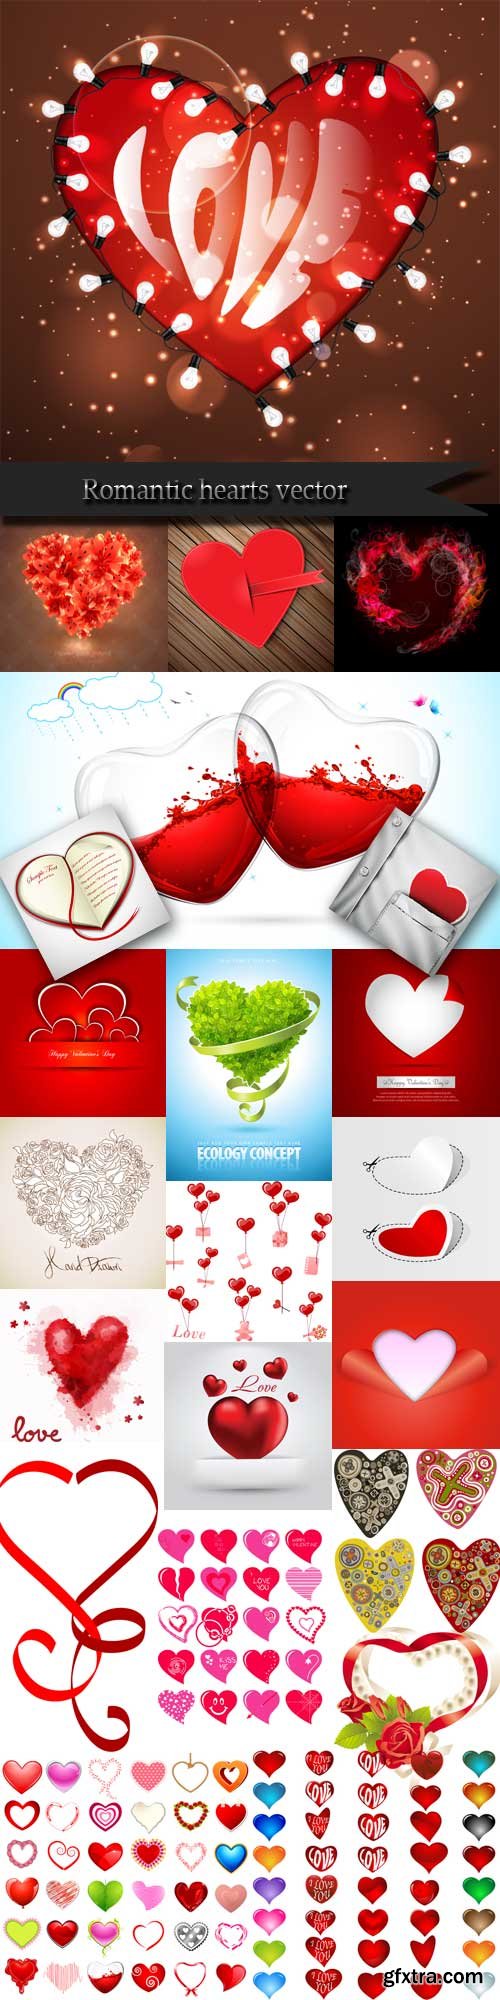 Romantic hearts vector